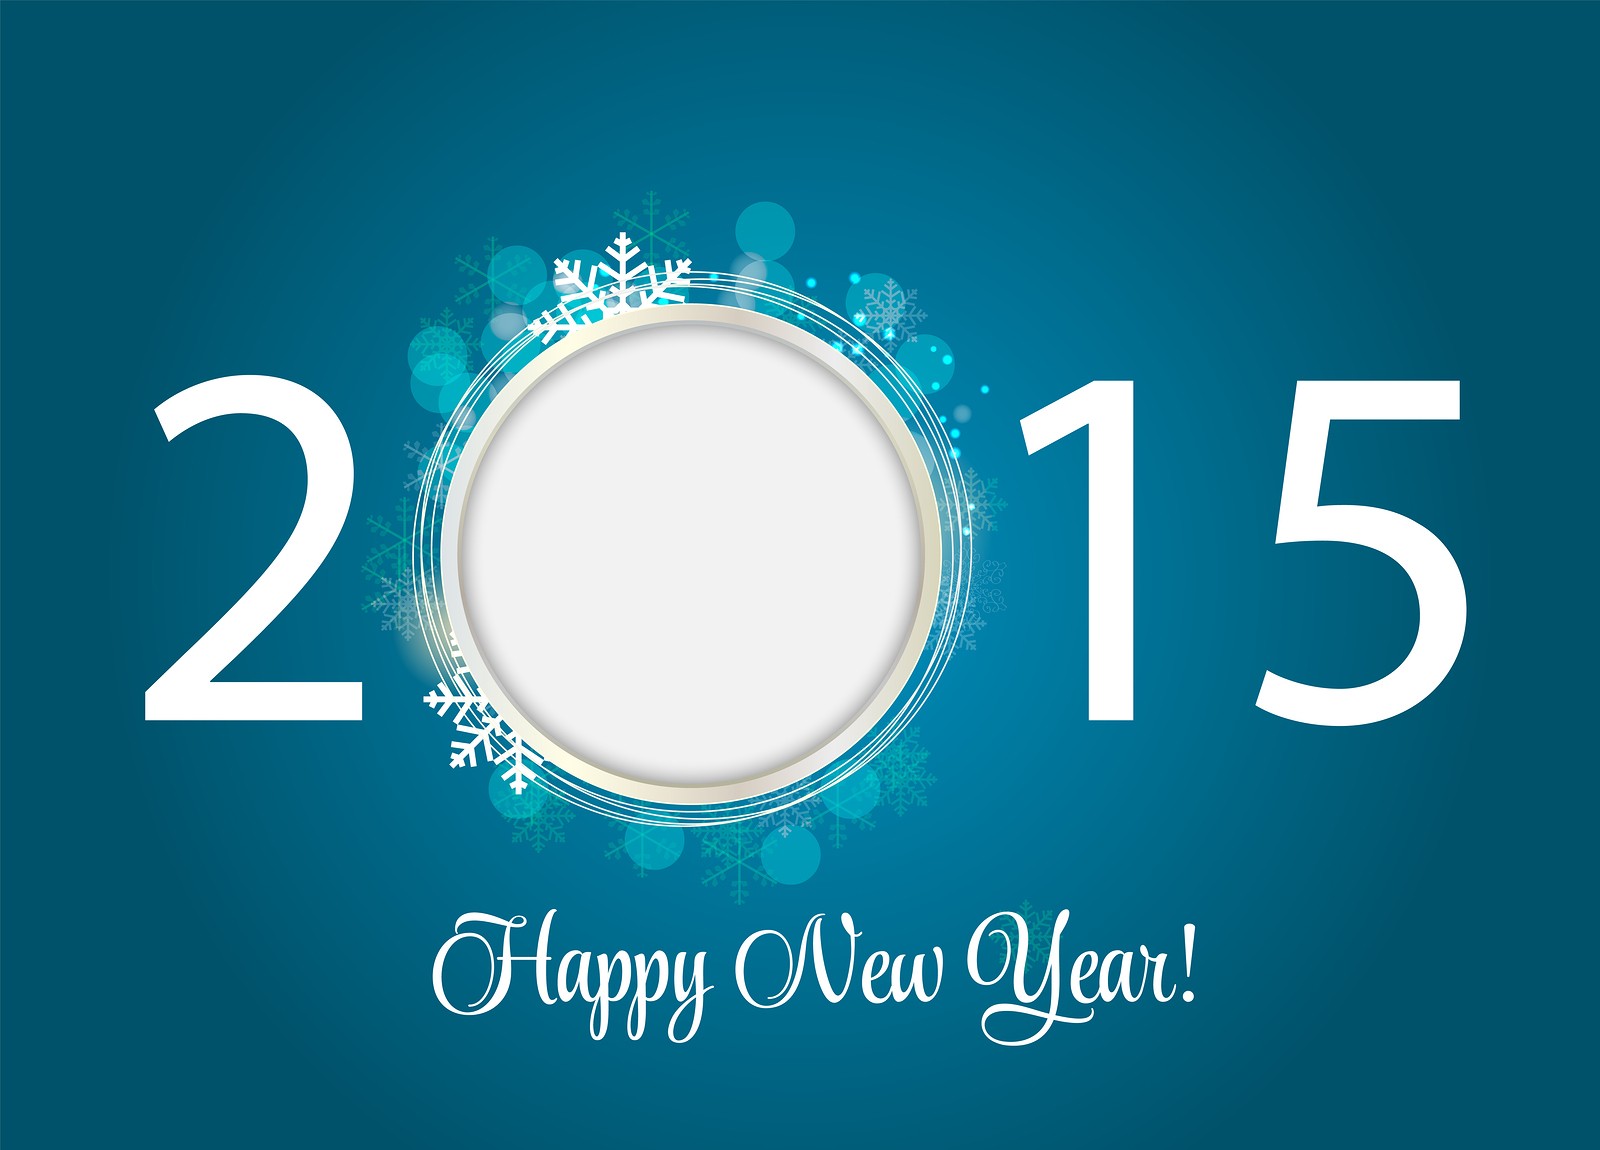 2015 HD Wallpapers Top 10 New Year Desktop background Wallpaper